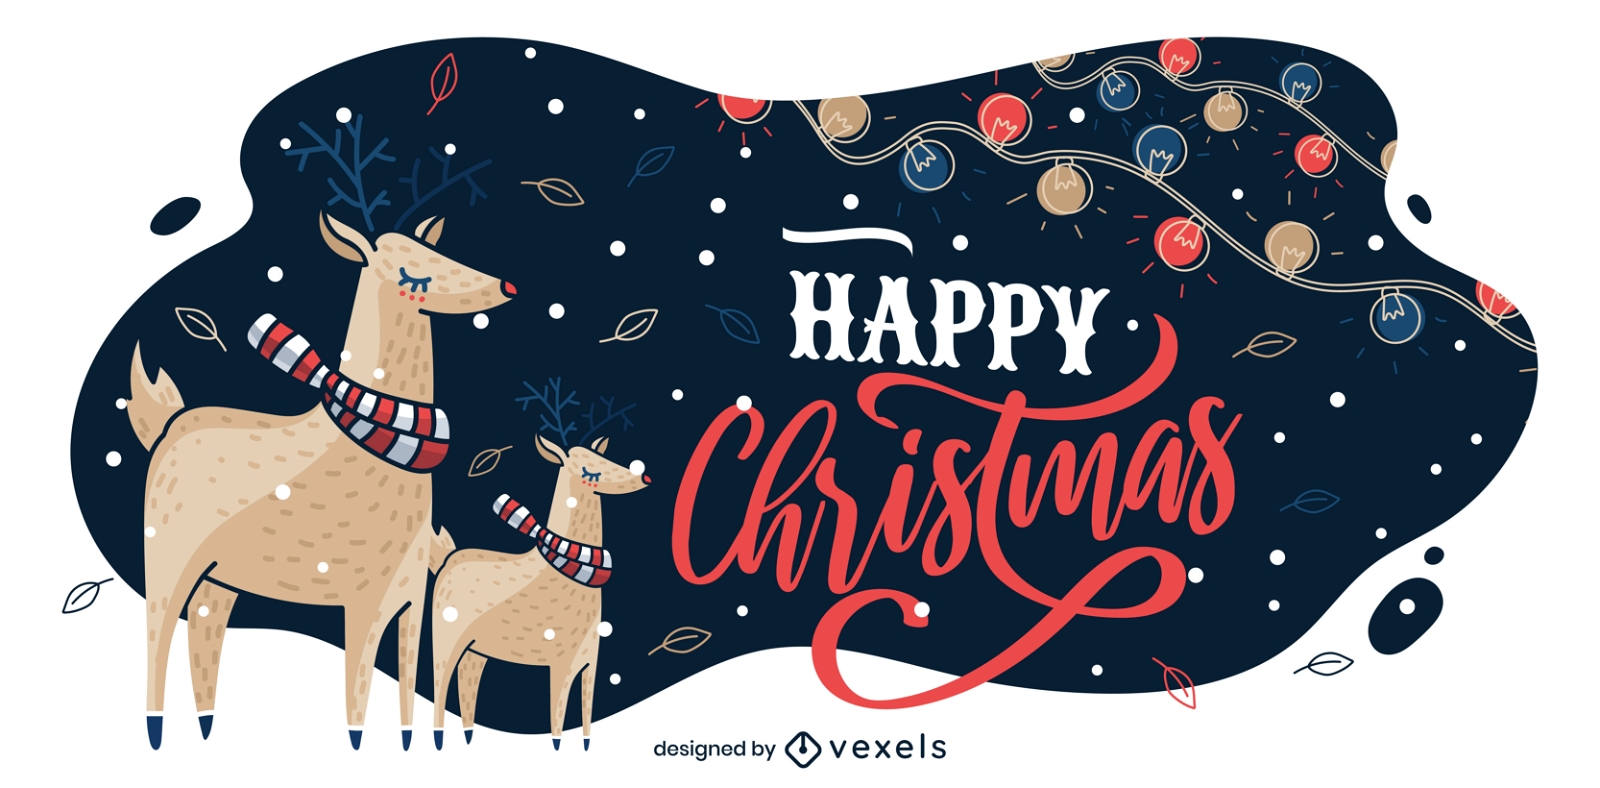 Merry christmas graphic illustration